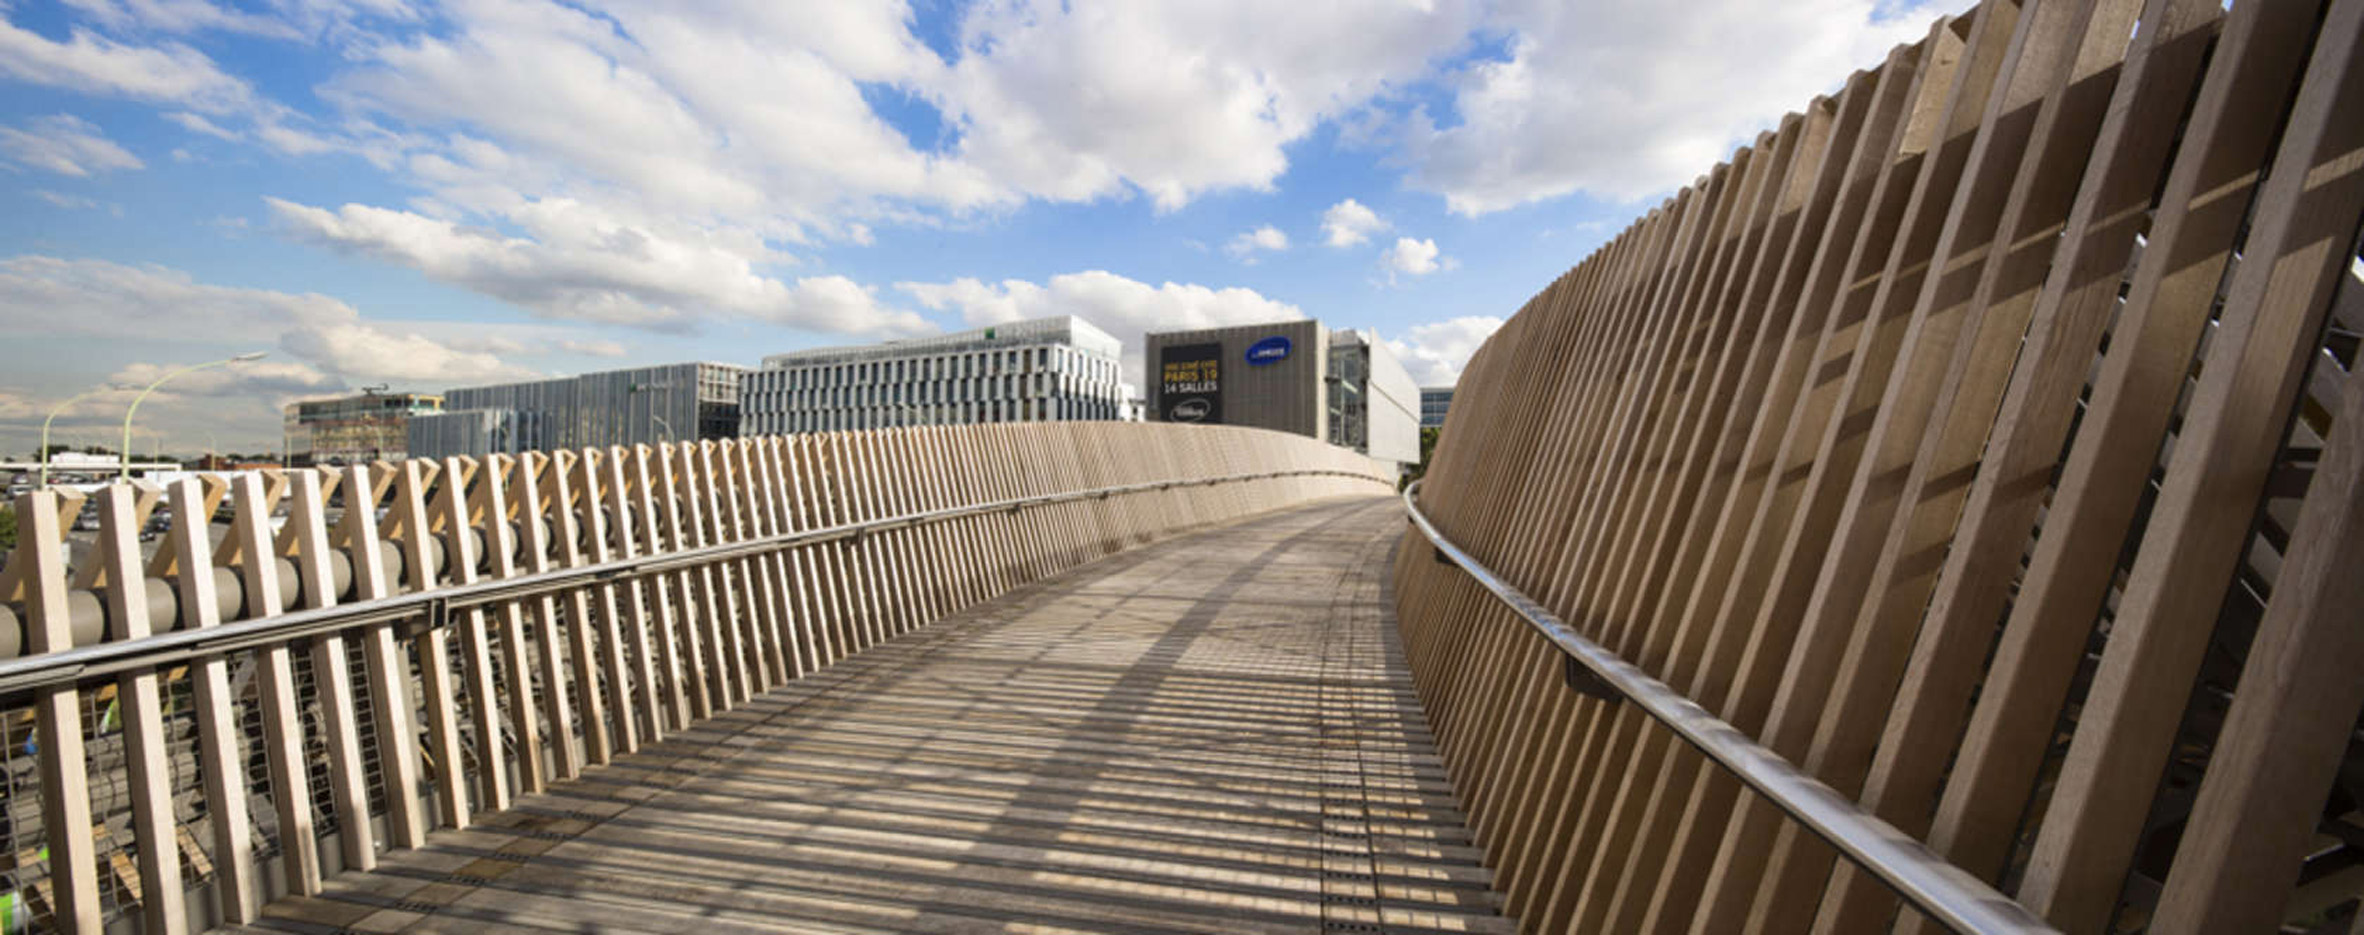 architizer-footbridge-over-the-boulevard-peripherique-dvvd-infrastructure_dezeen_2364_col_0